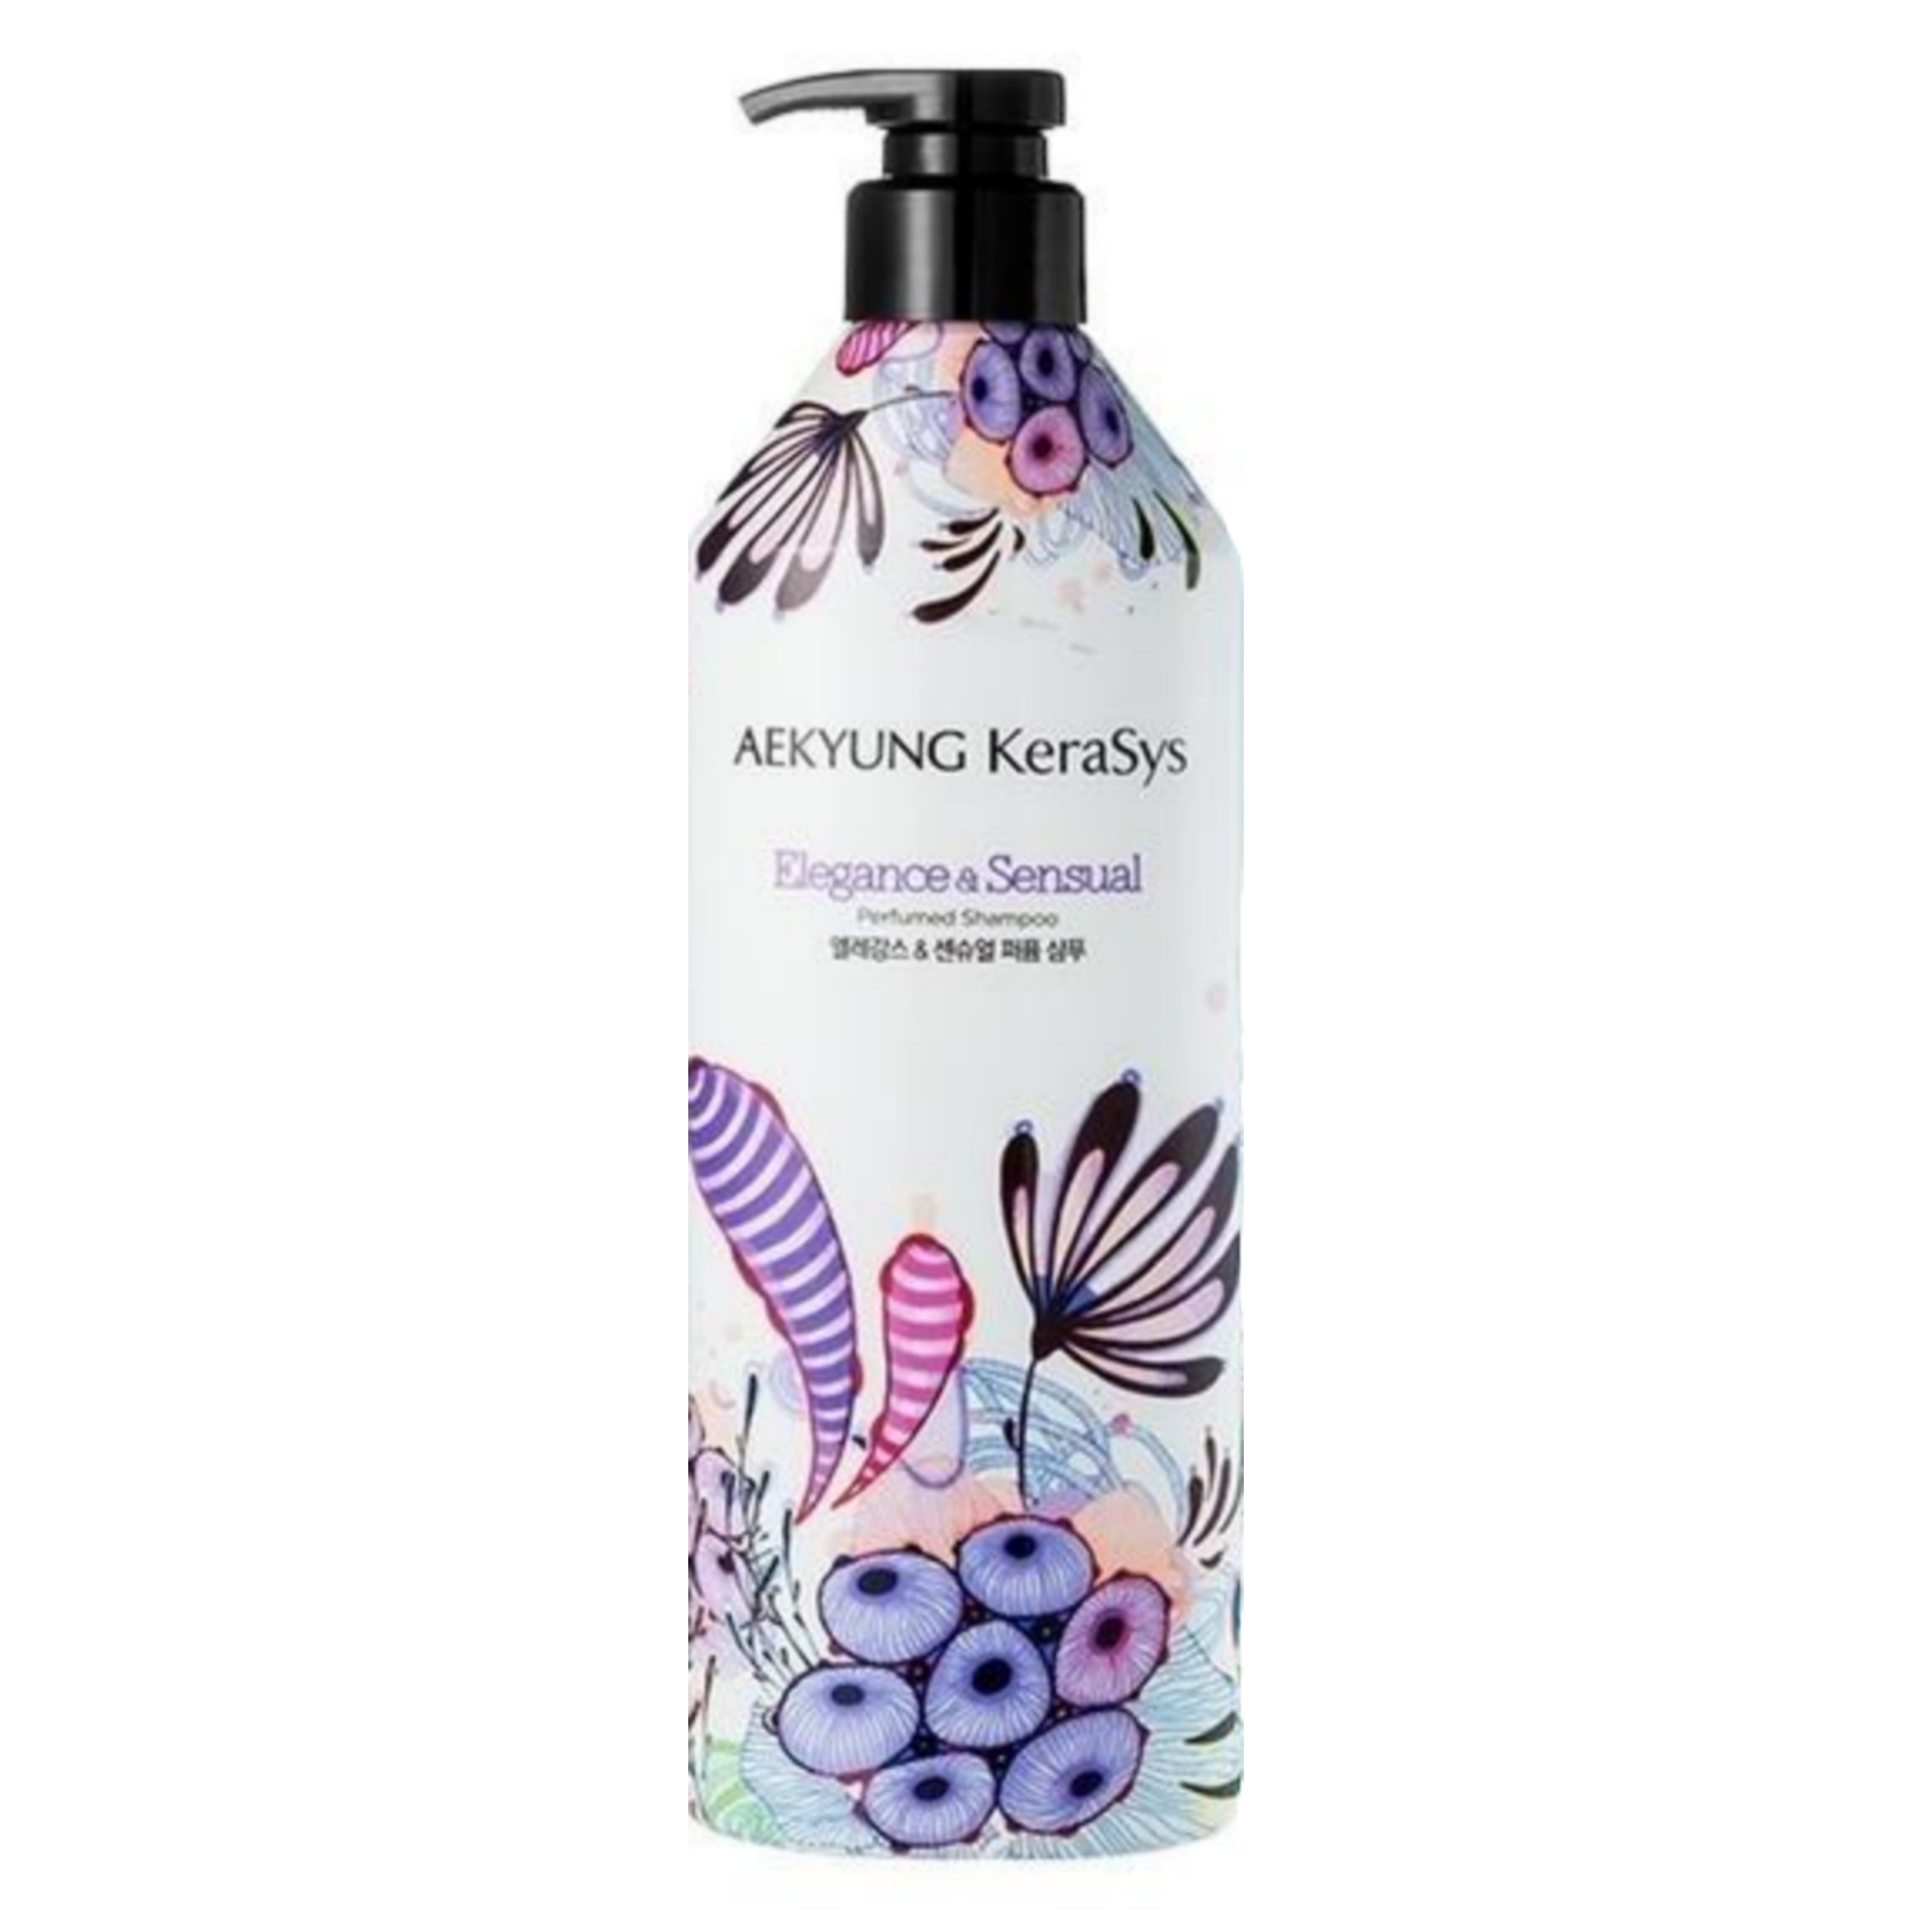 AEKYUNG KERASYS Elegance & Sensual perfumed shampoo شامبو الشعر المعطر من ايكيونك كيراساس